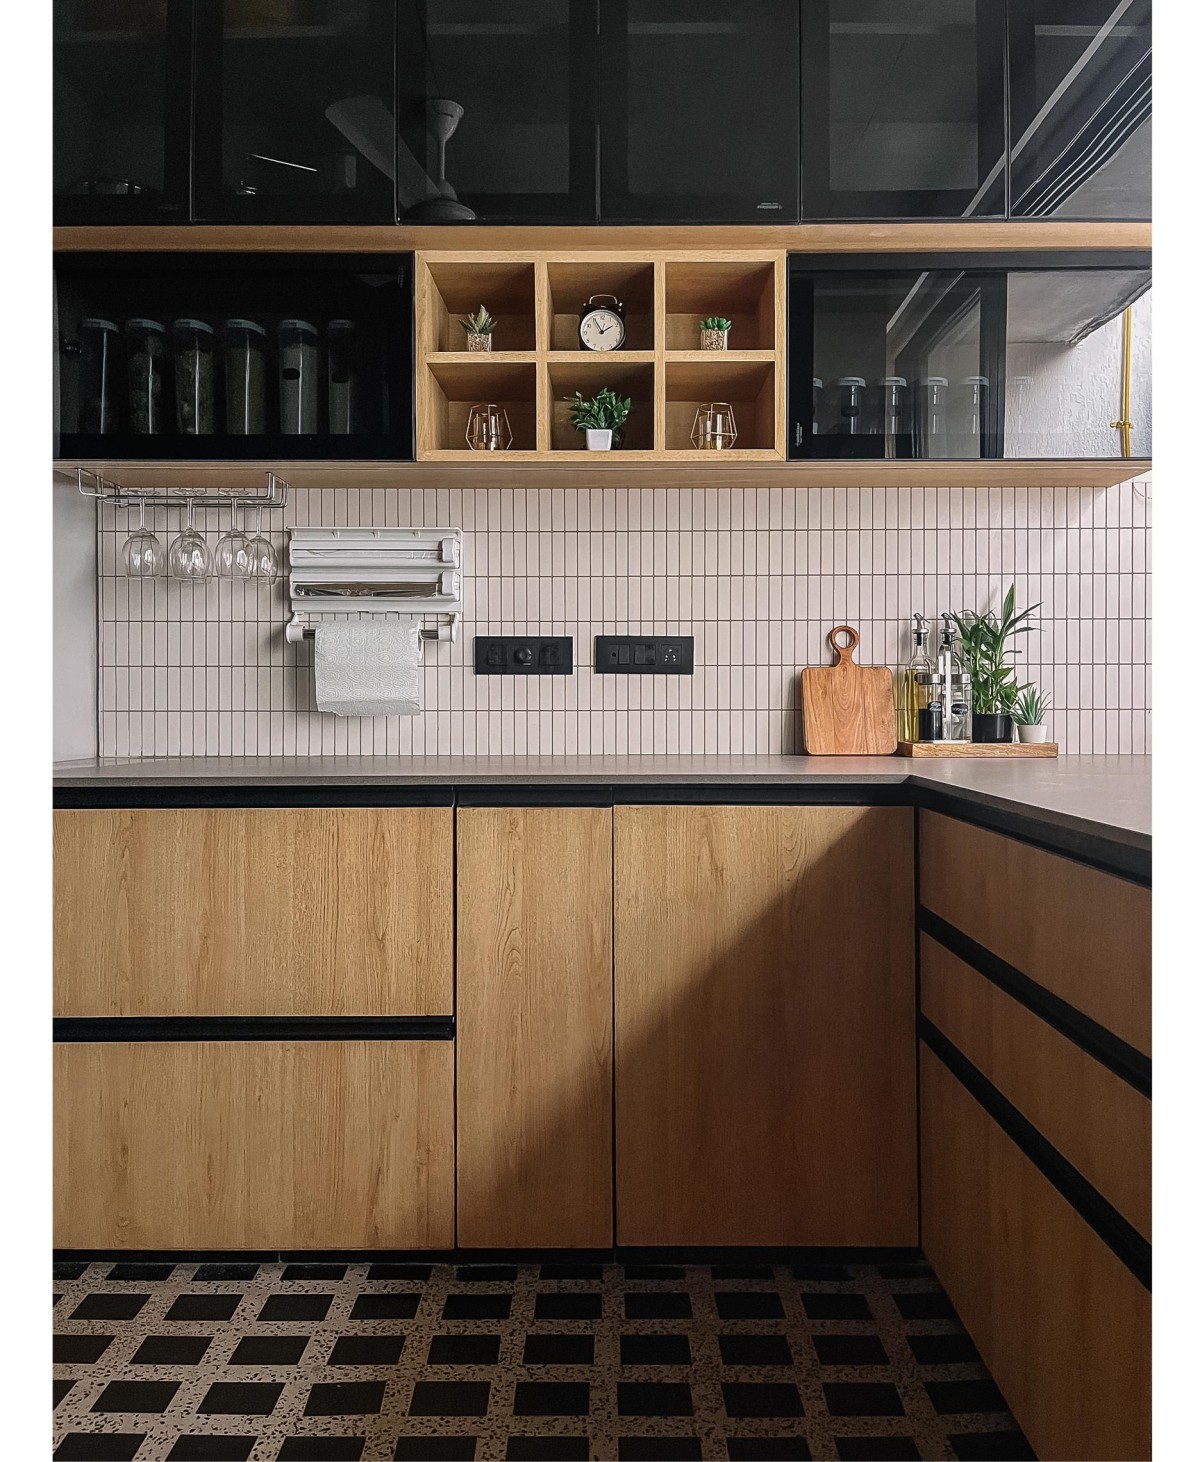 Kitchen of The Tiny House by Neogenesis+Studi0261